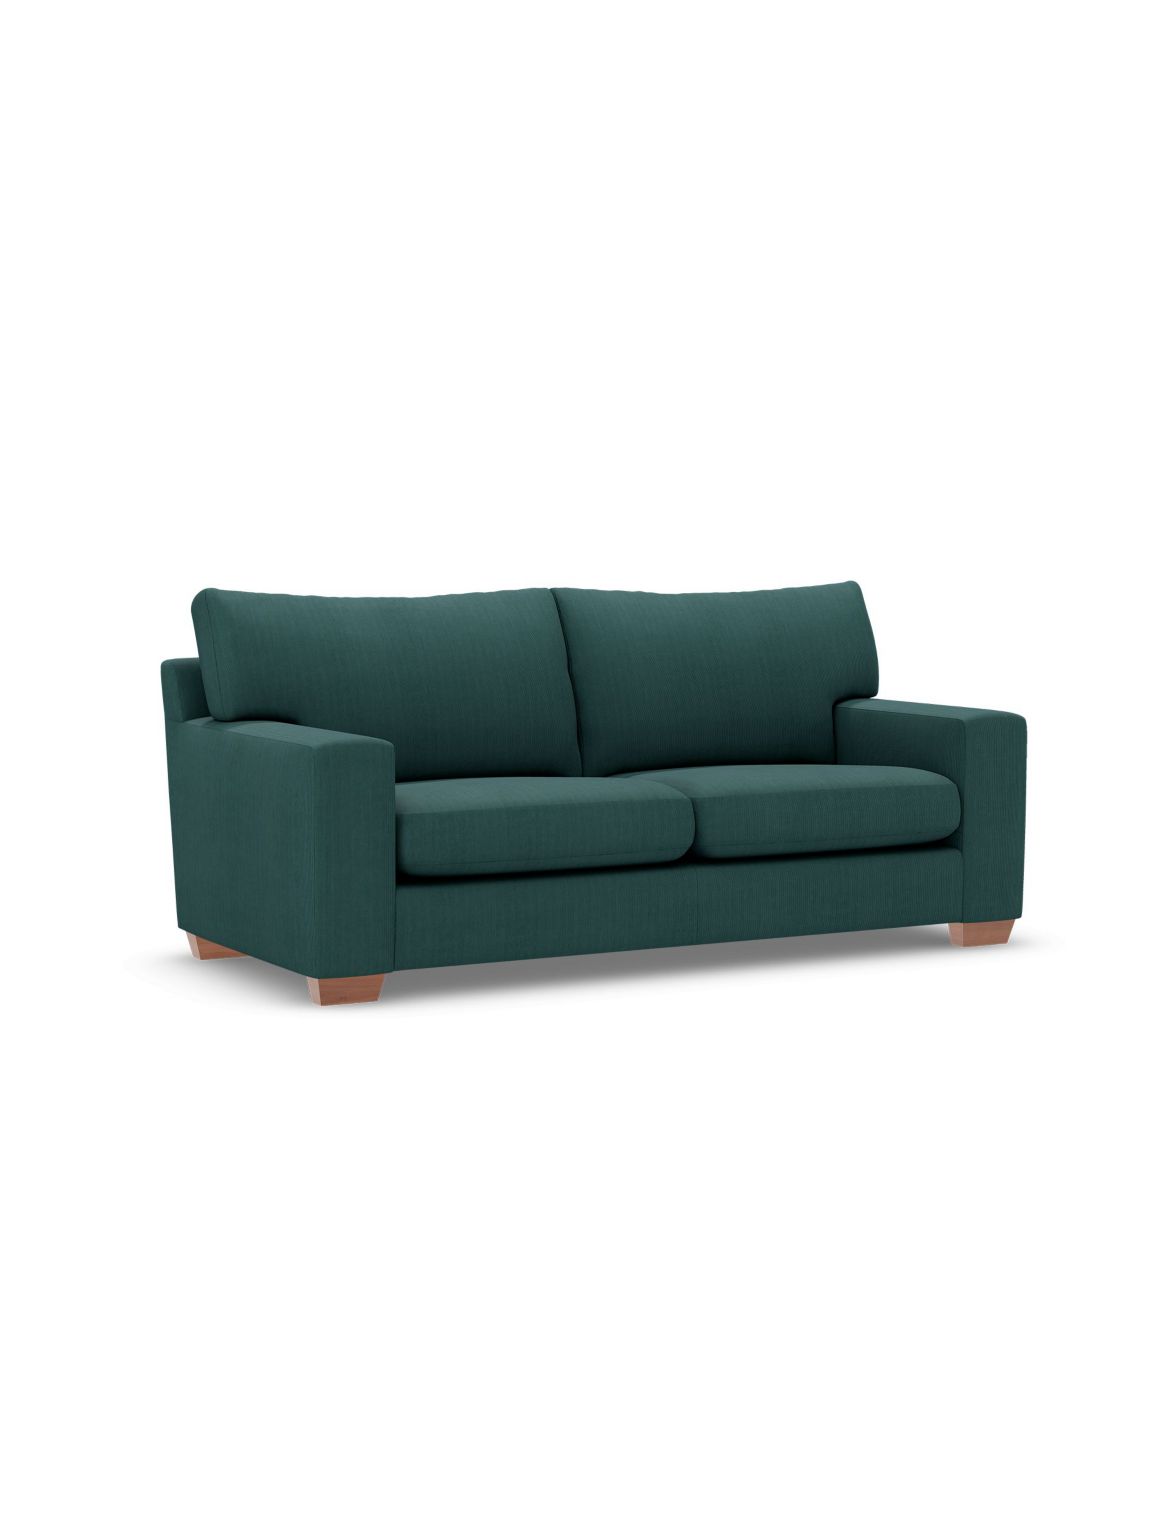 Alfie Medium Sofa green